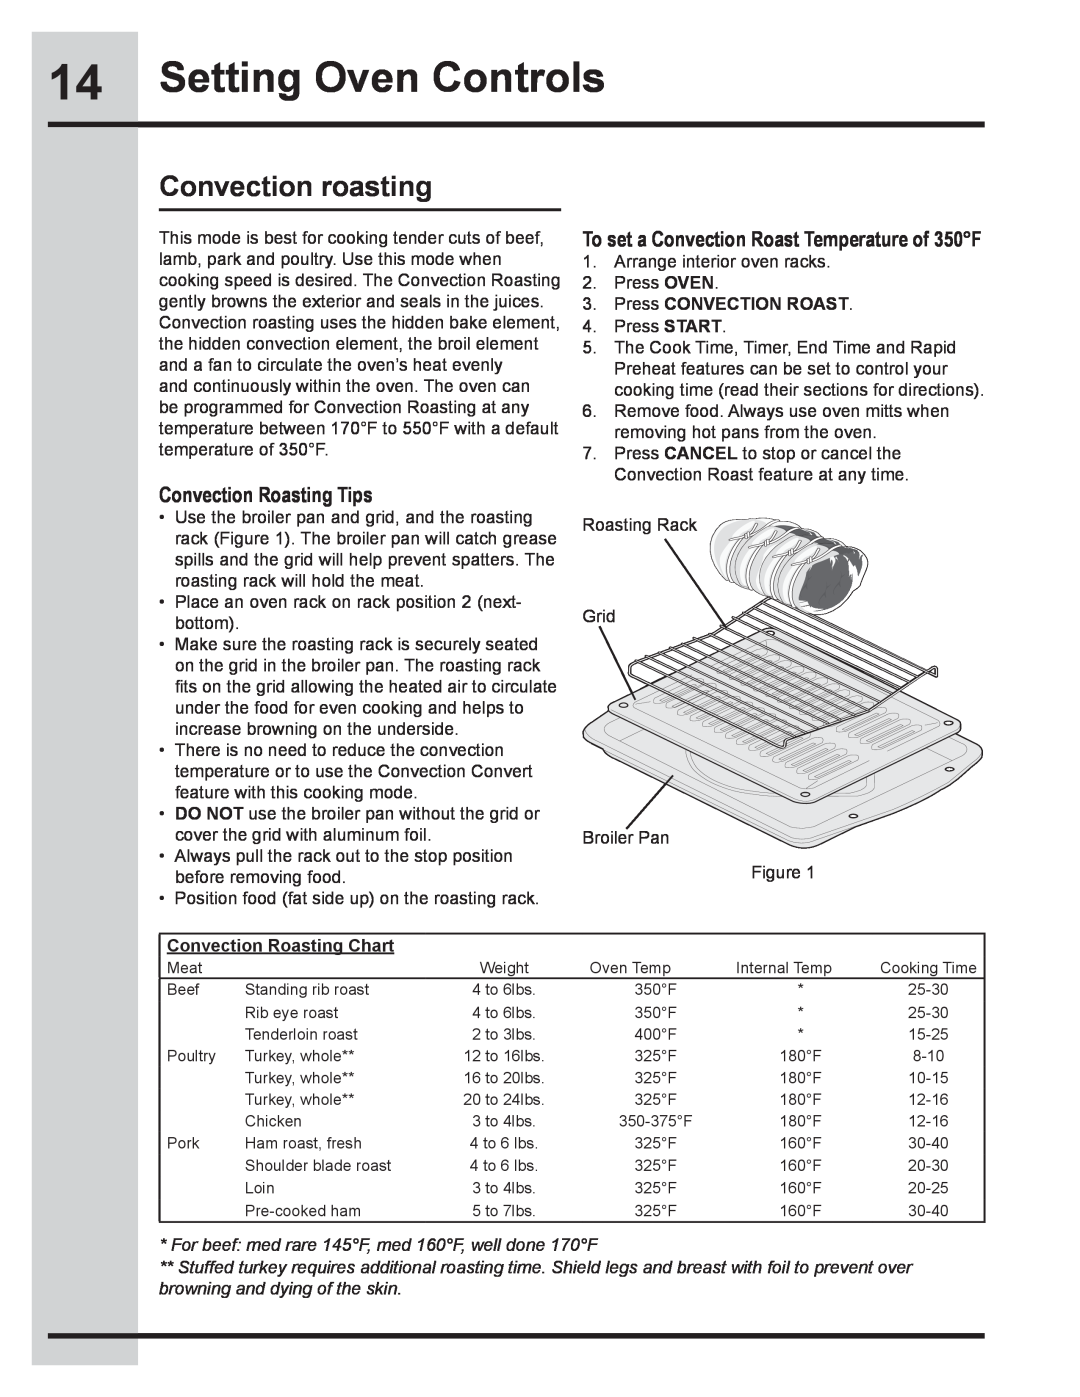 Electrolux 318205134 manual Setting Oven Controls, Convection roasting, Convection Roasting Tips, Press CONVECTION ROAST 